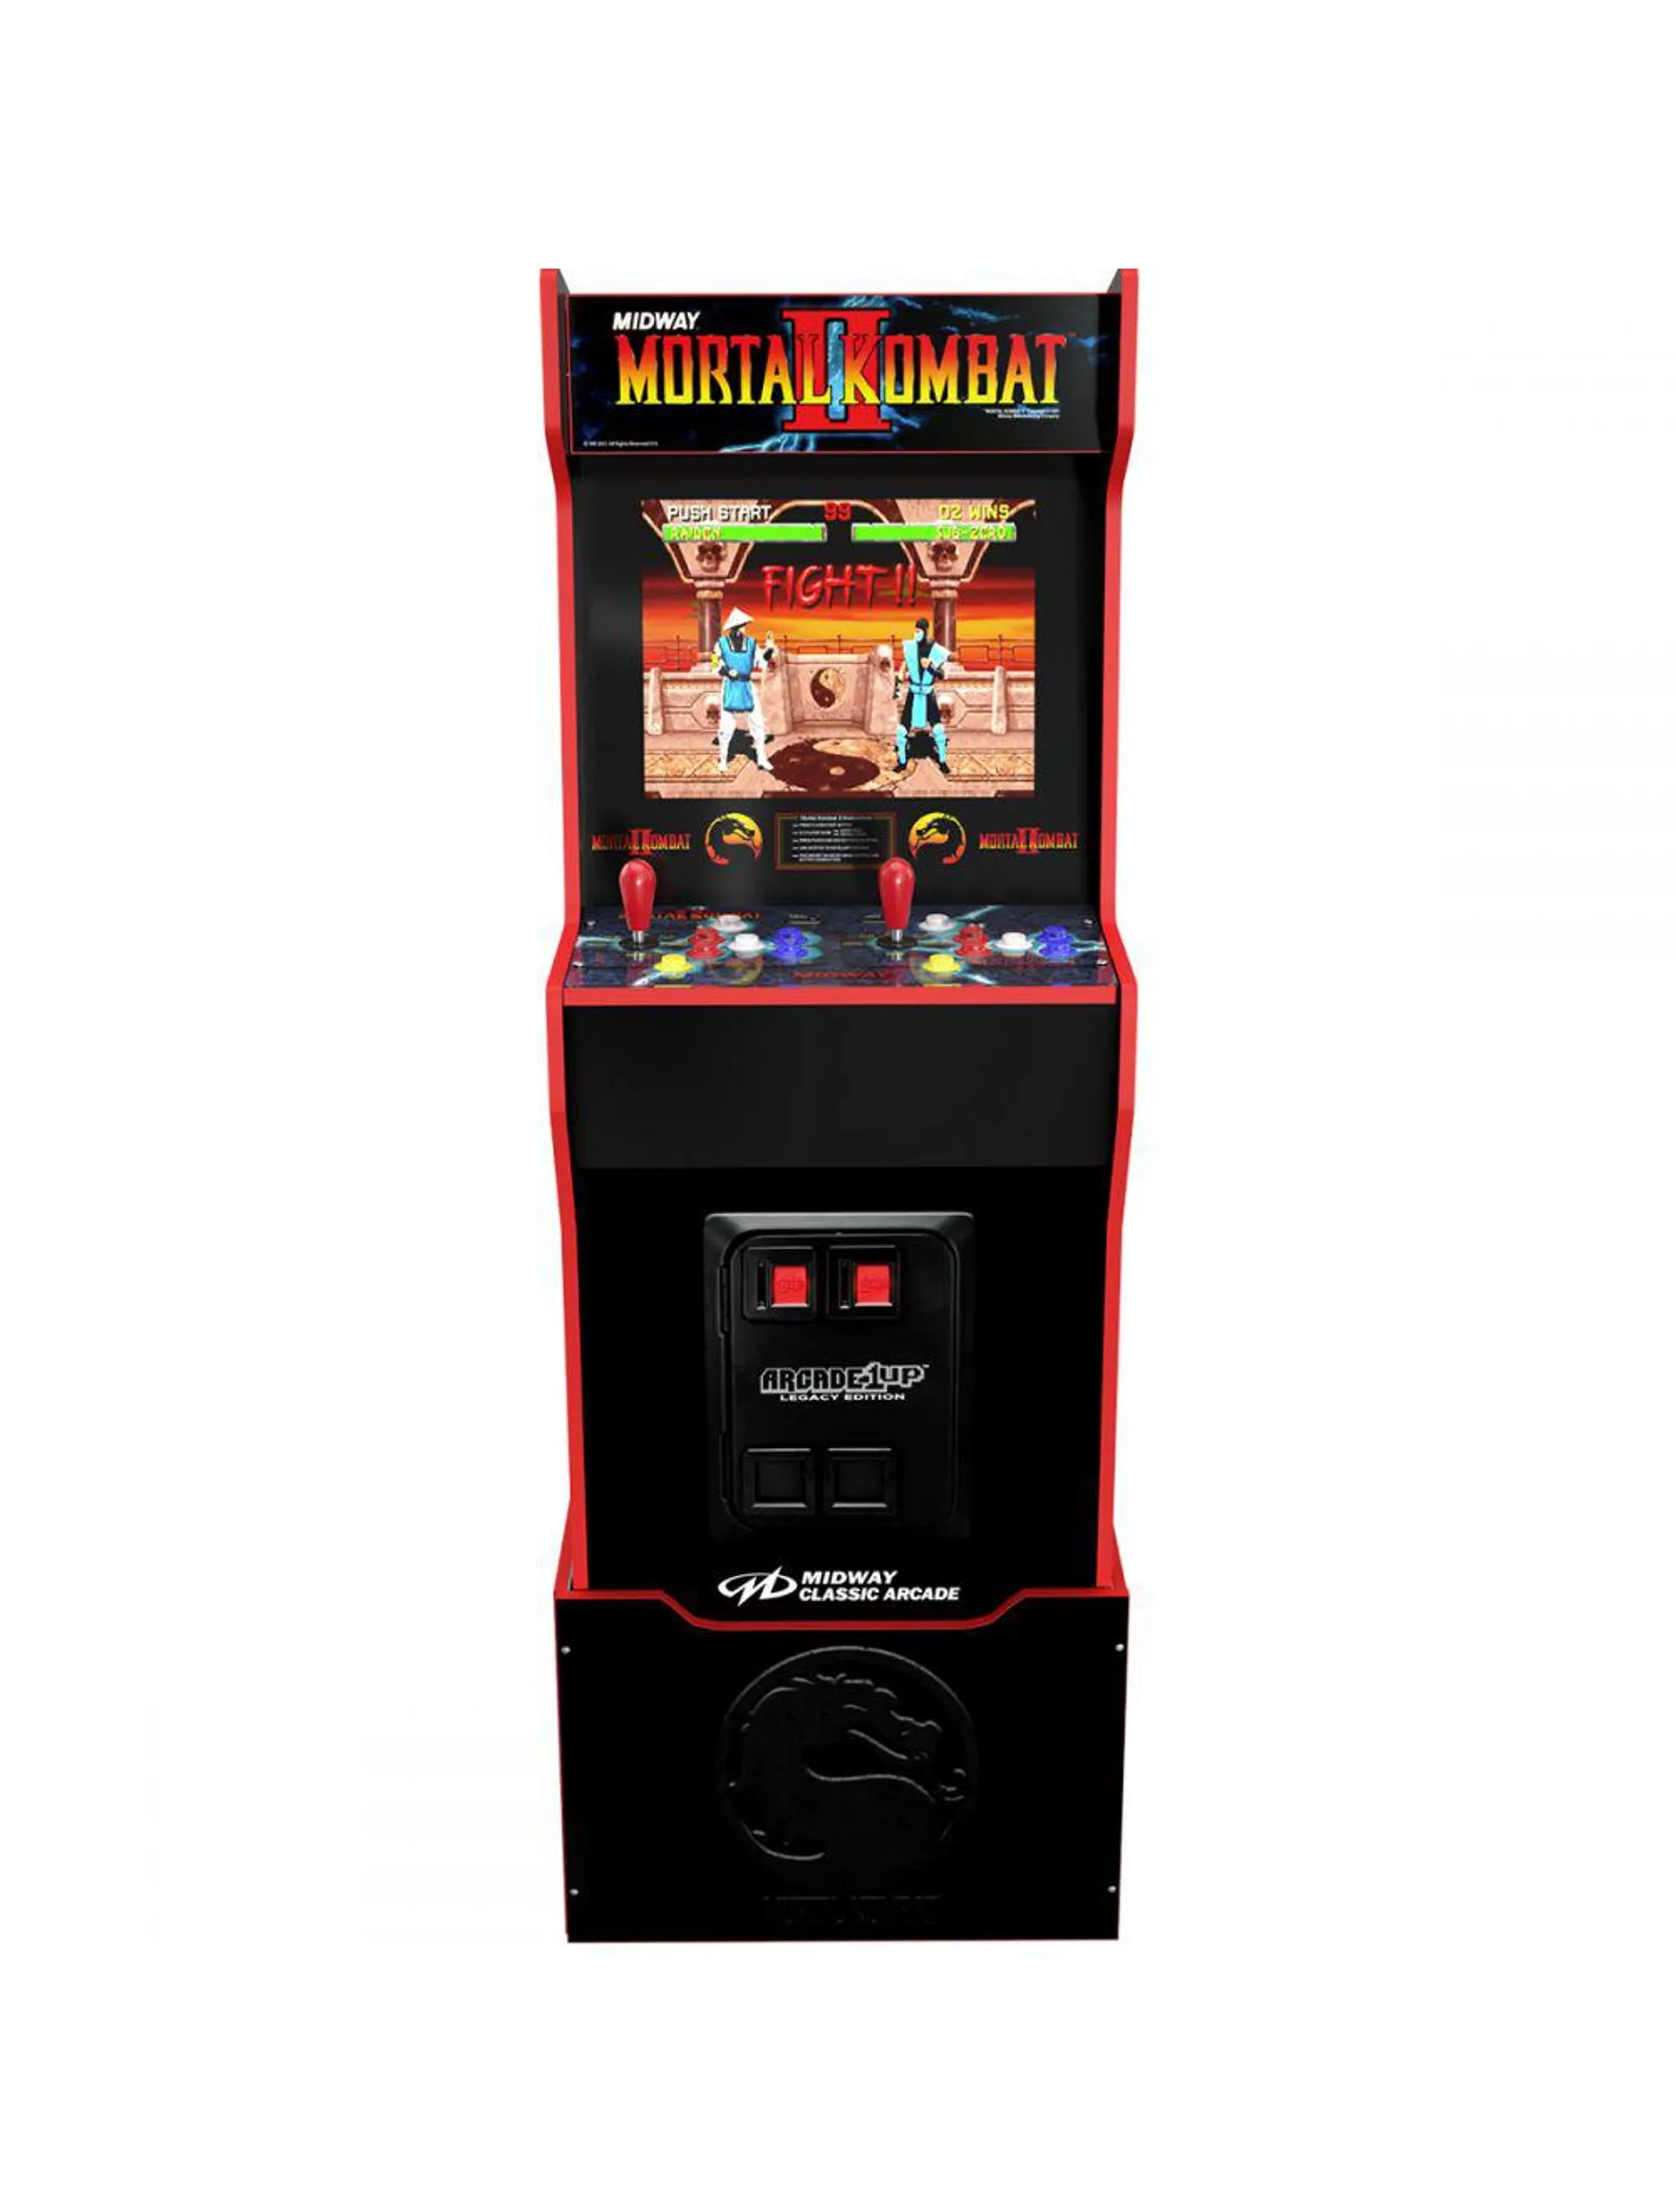 Arcade 1UP - Midway Legacy w/ Riser 2 Players (Mortal Kombat)